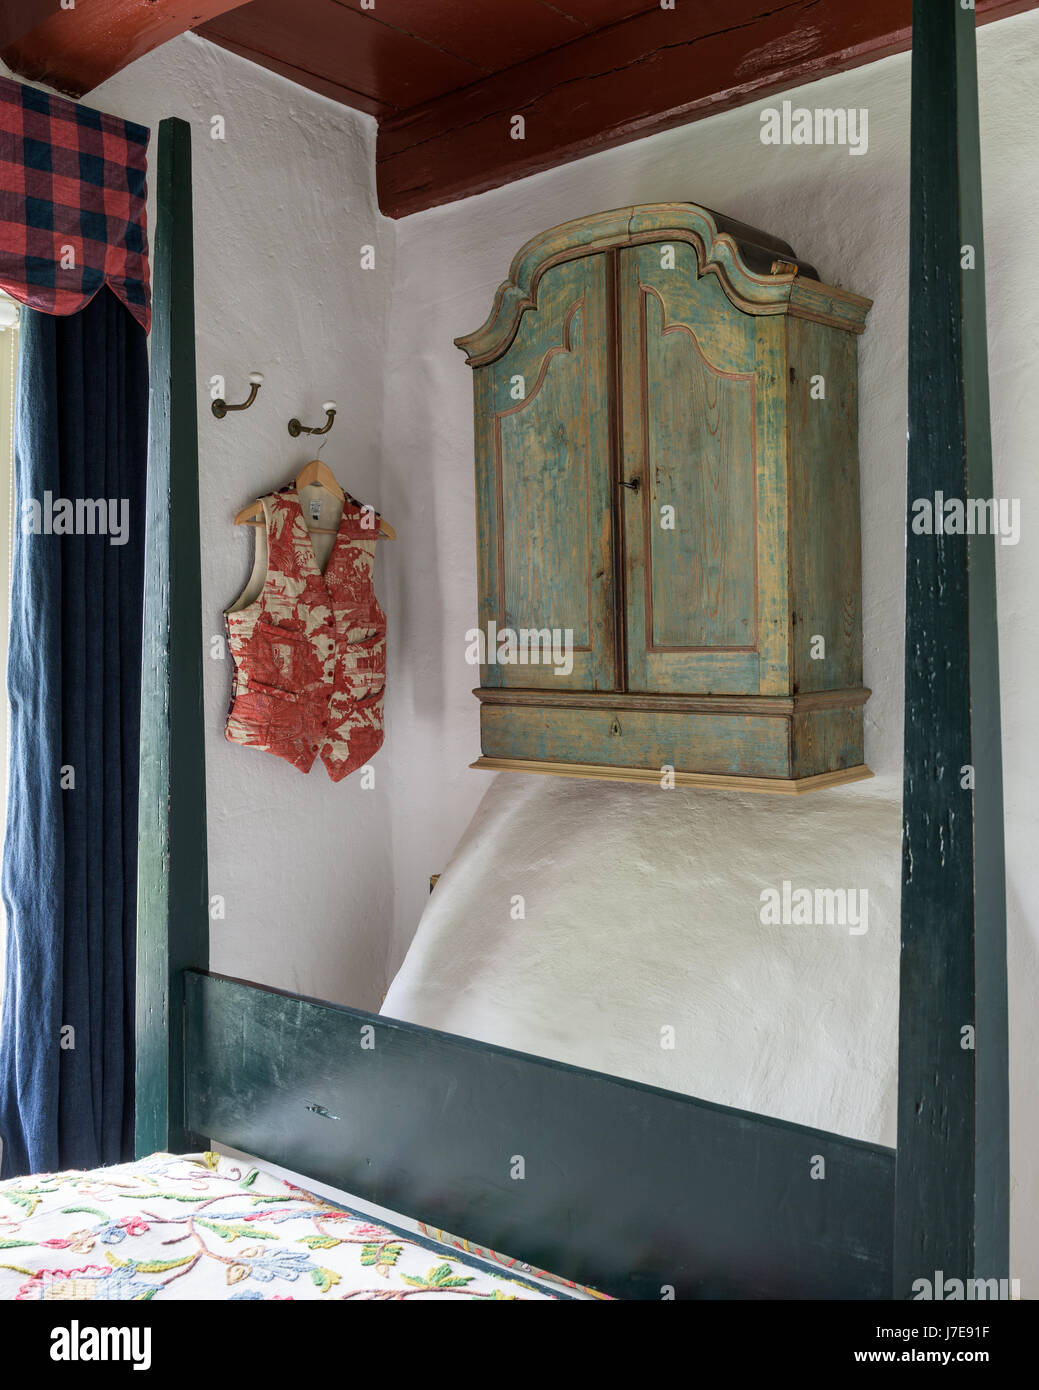 Xviii secolo svedese armadio a muro con letto dipinte racing green Foto Stock